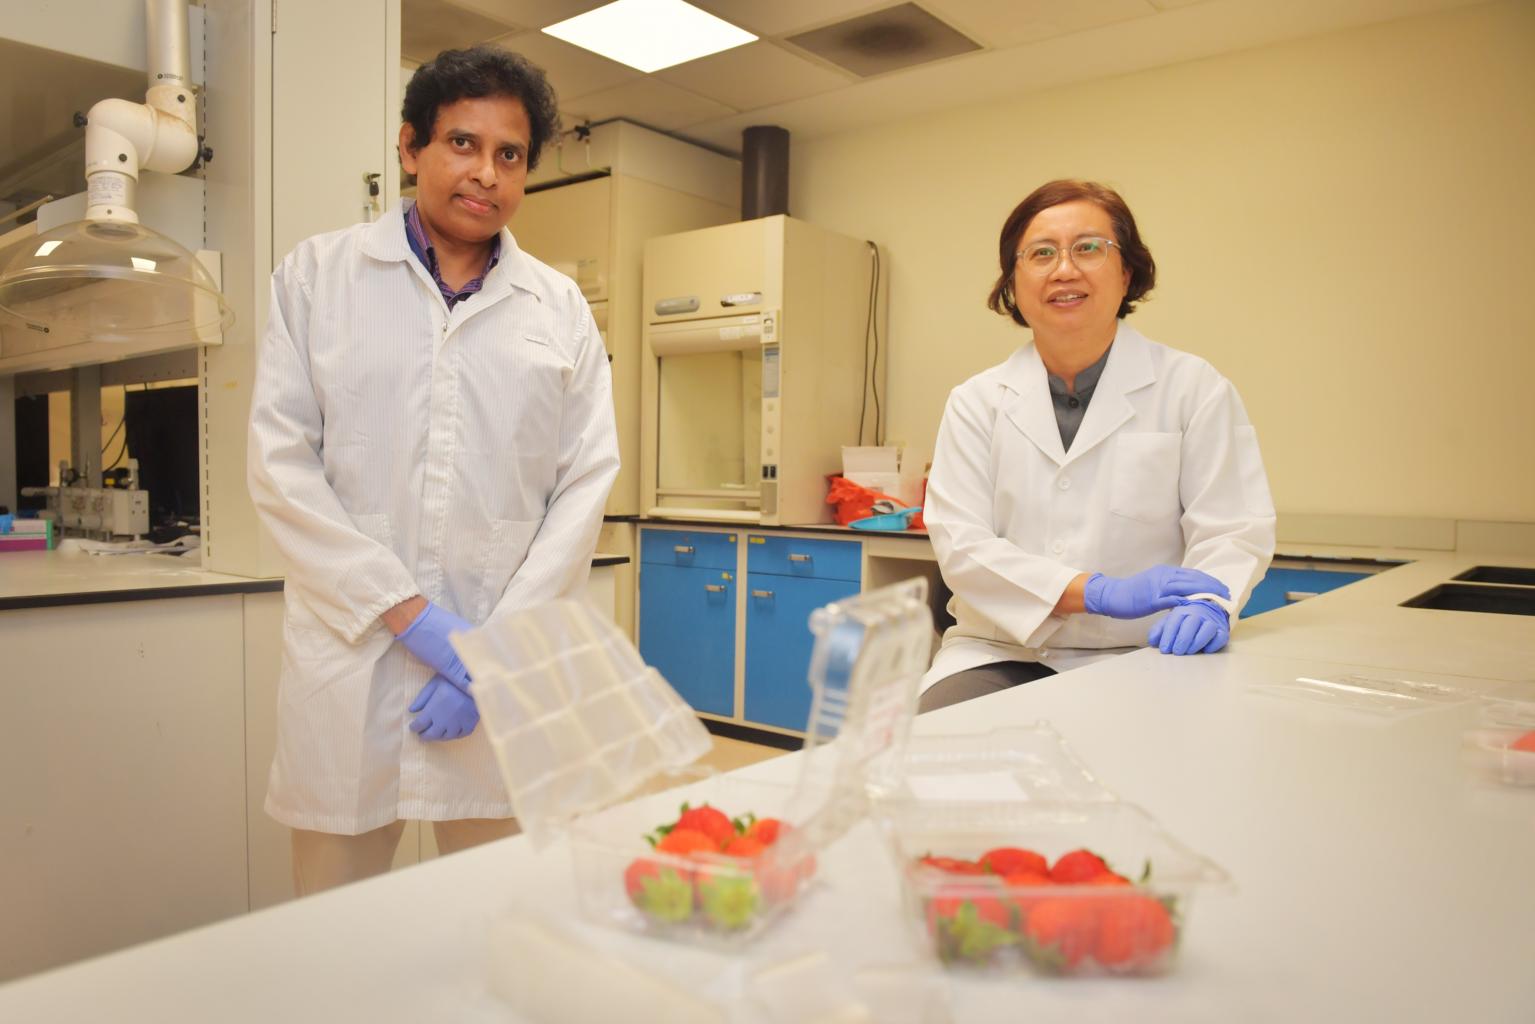 S’pore, US scientists create bacteria-killing, biodegradable food packaging material